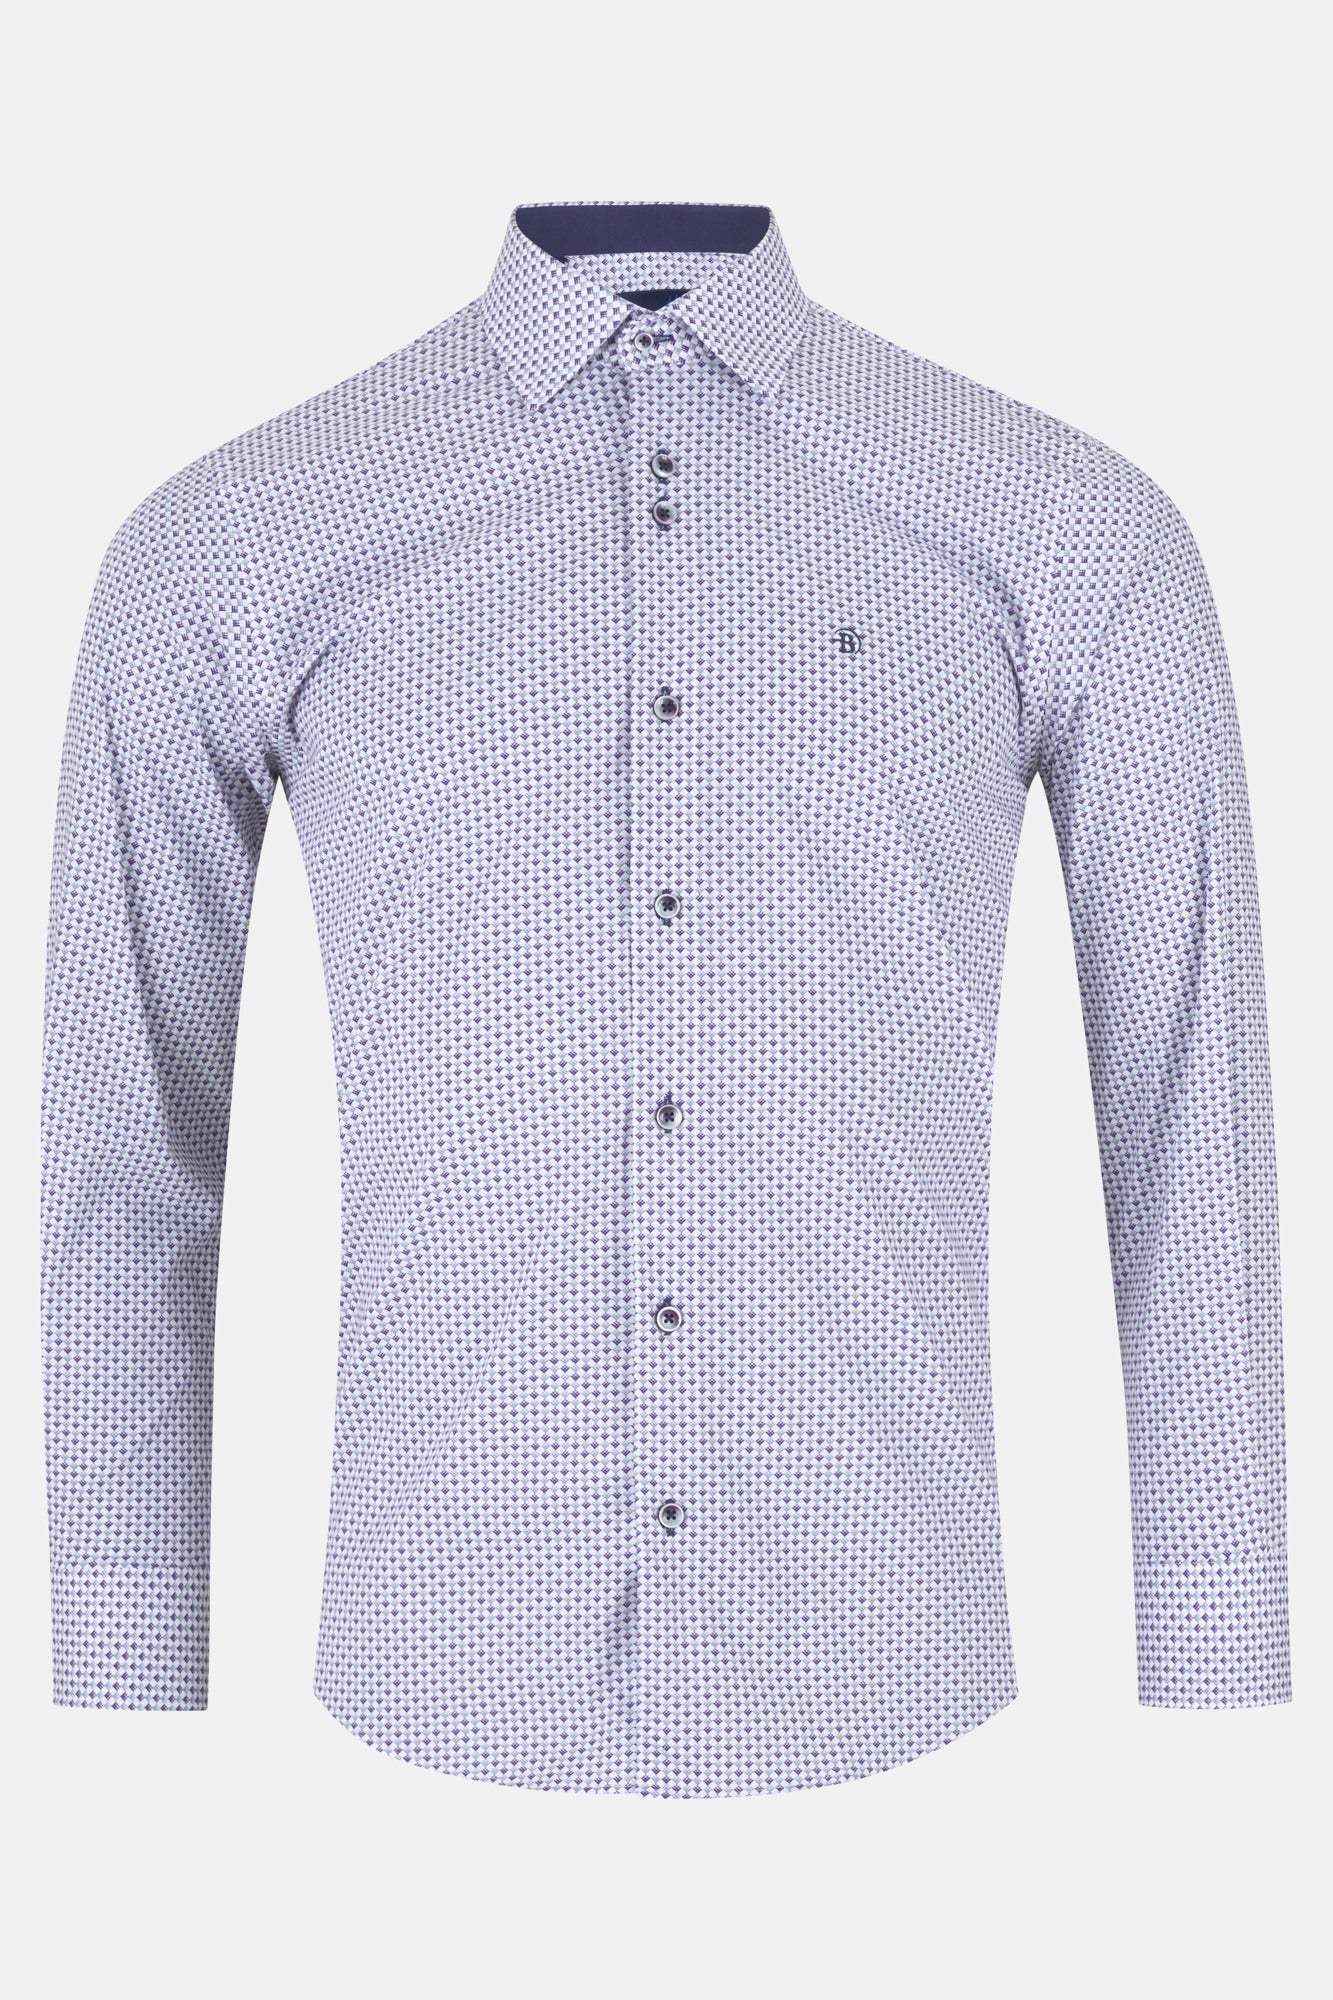 Cody Grape Long Sleeve Shirt By Benetti Menswear 